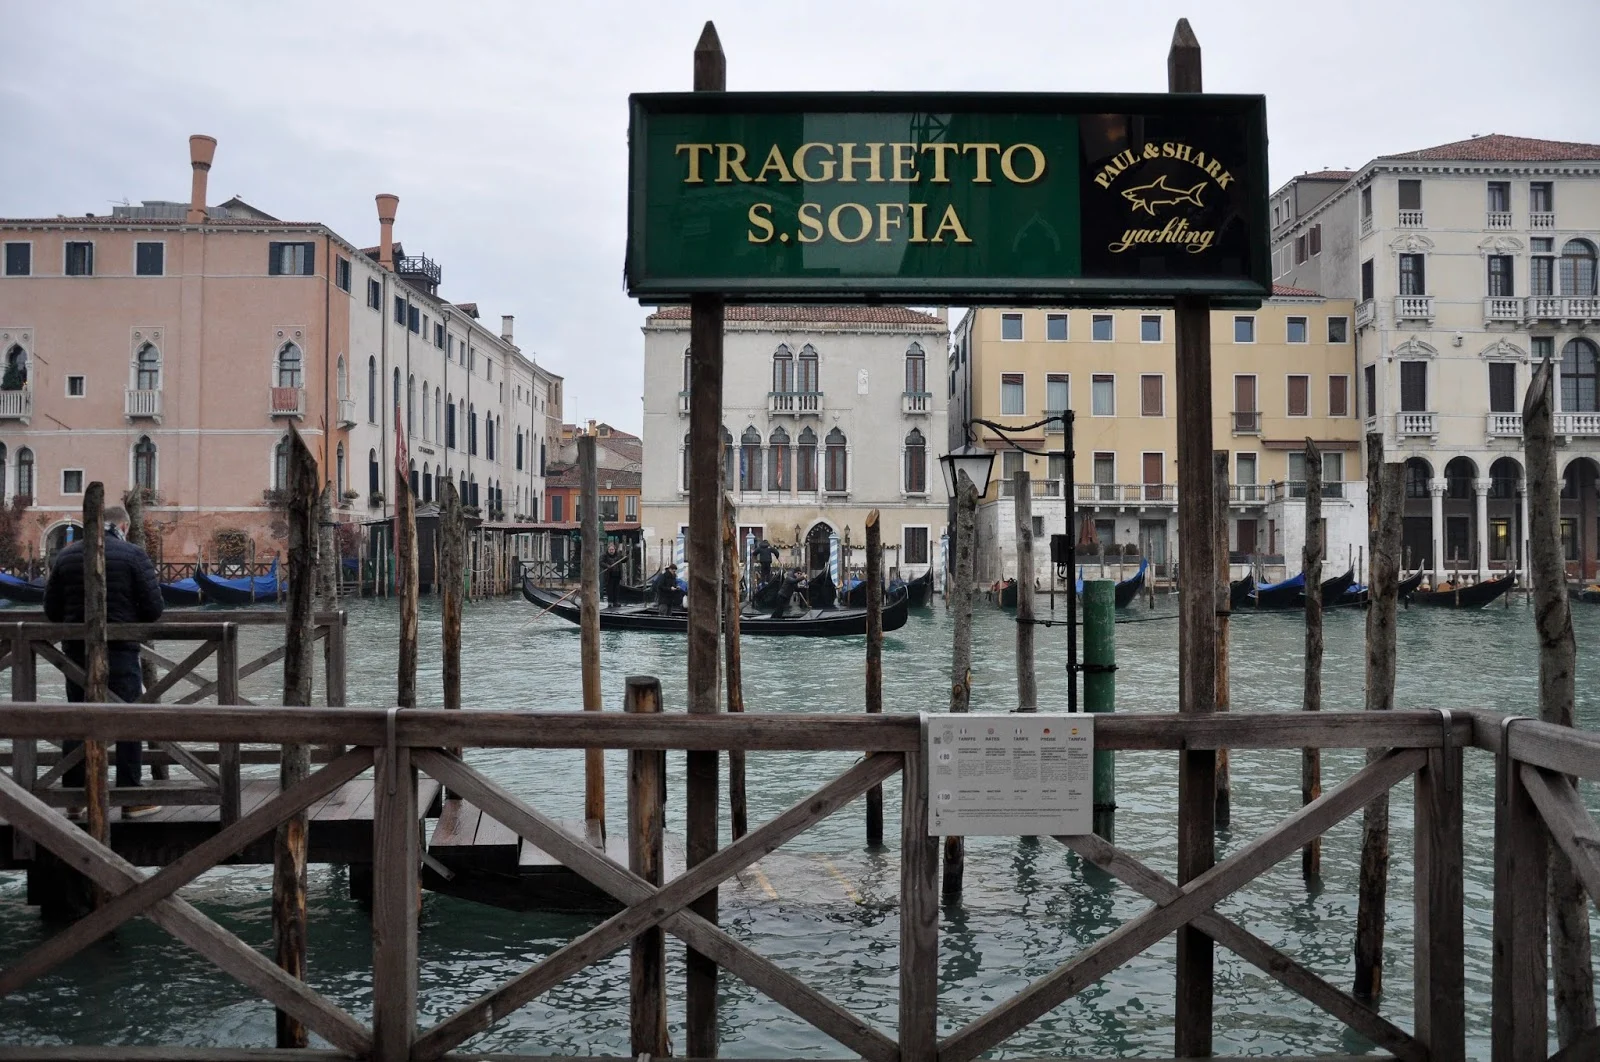 Traghetto - S. Sofia stop - Venice, Italy - rossiwrites.com